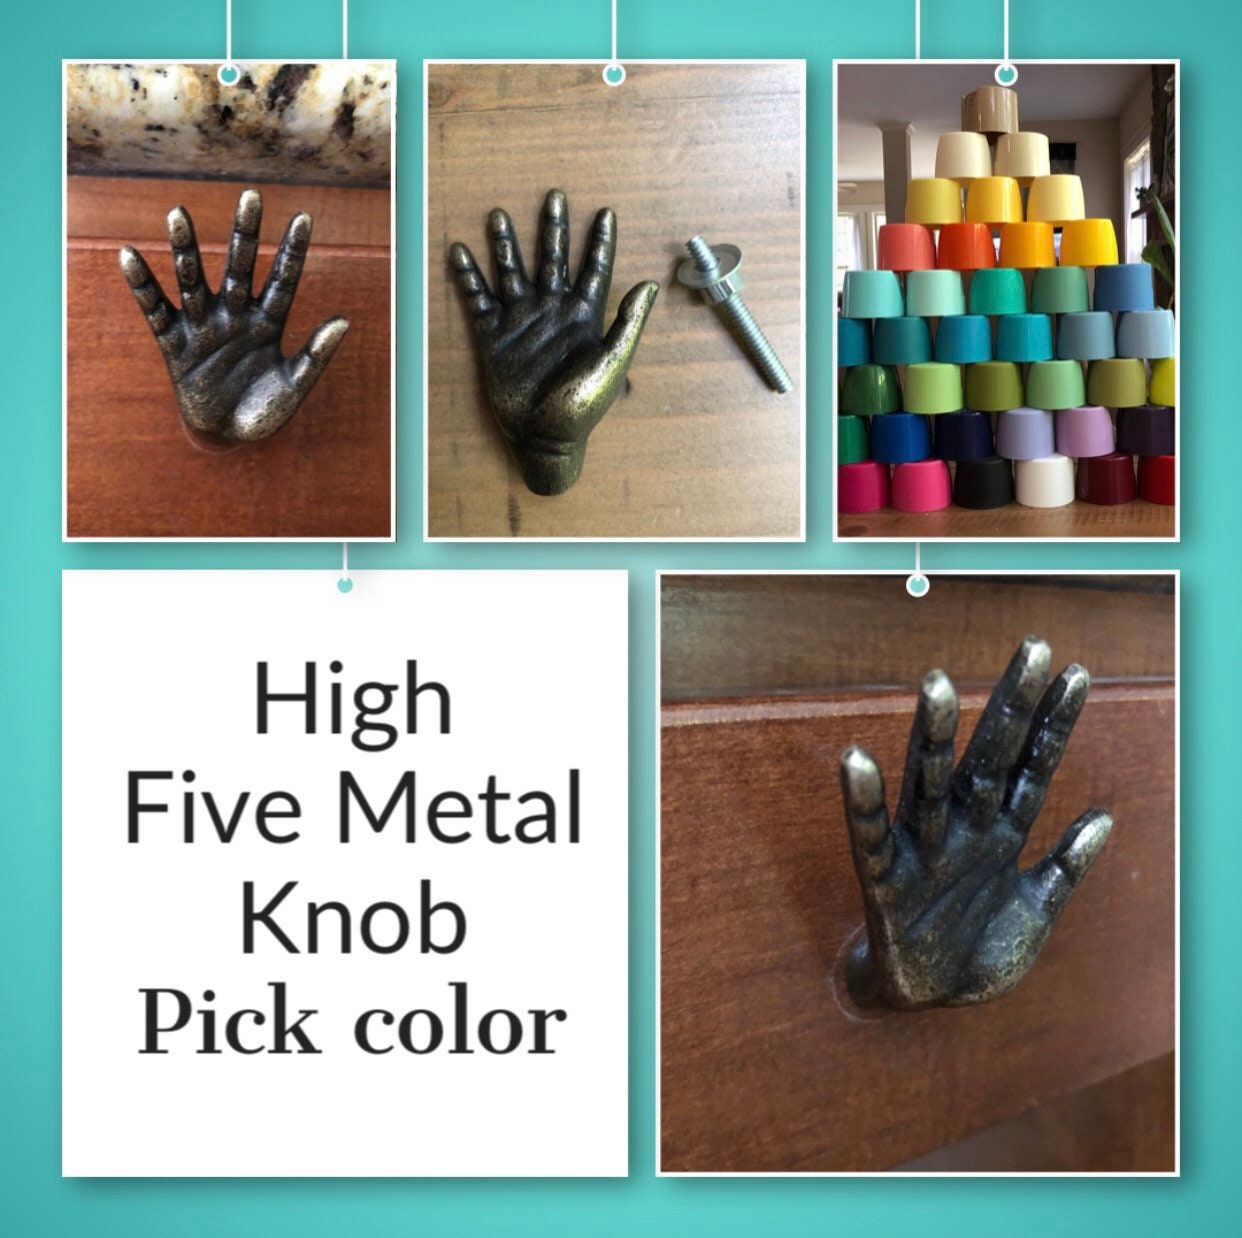 Sale/HAND Metal Cabinet Knob/Metal hand knob/High Five hand knob/PICK COLOR hand knob/Metal Bronze Knob Dresser Cabinet Drawer Pull/